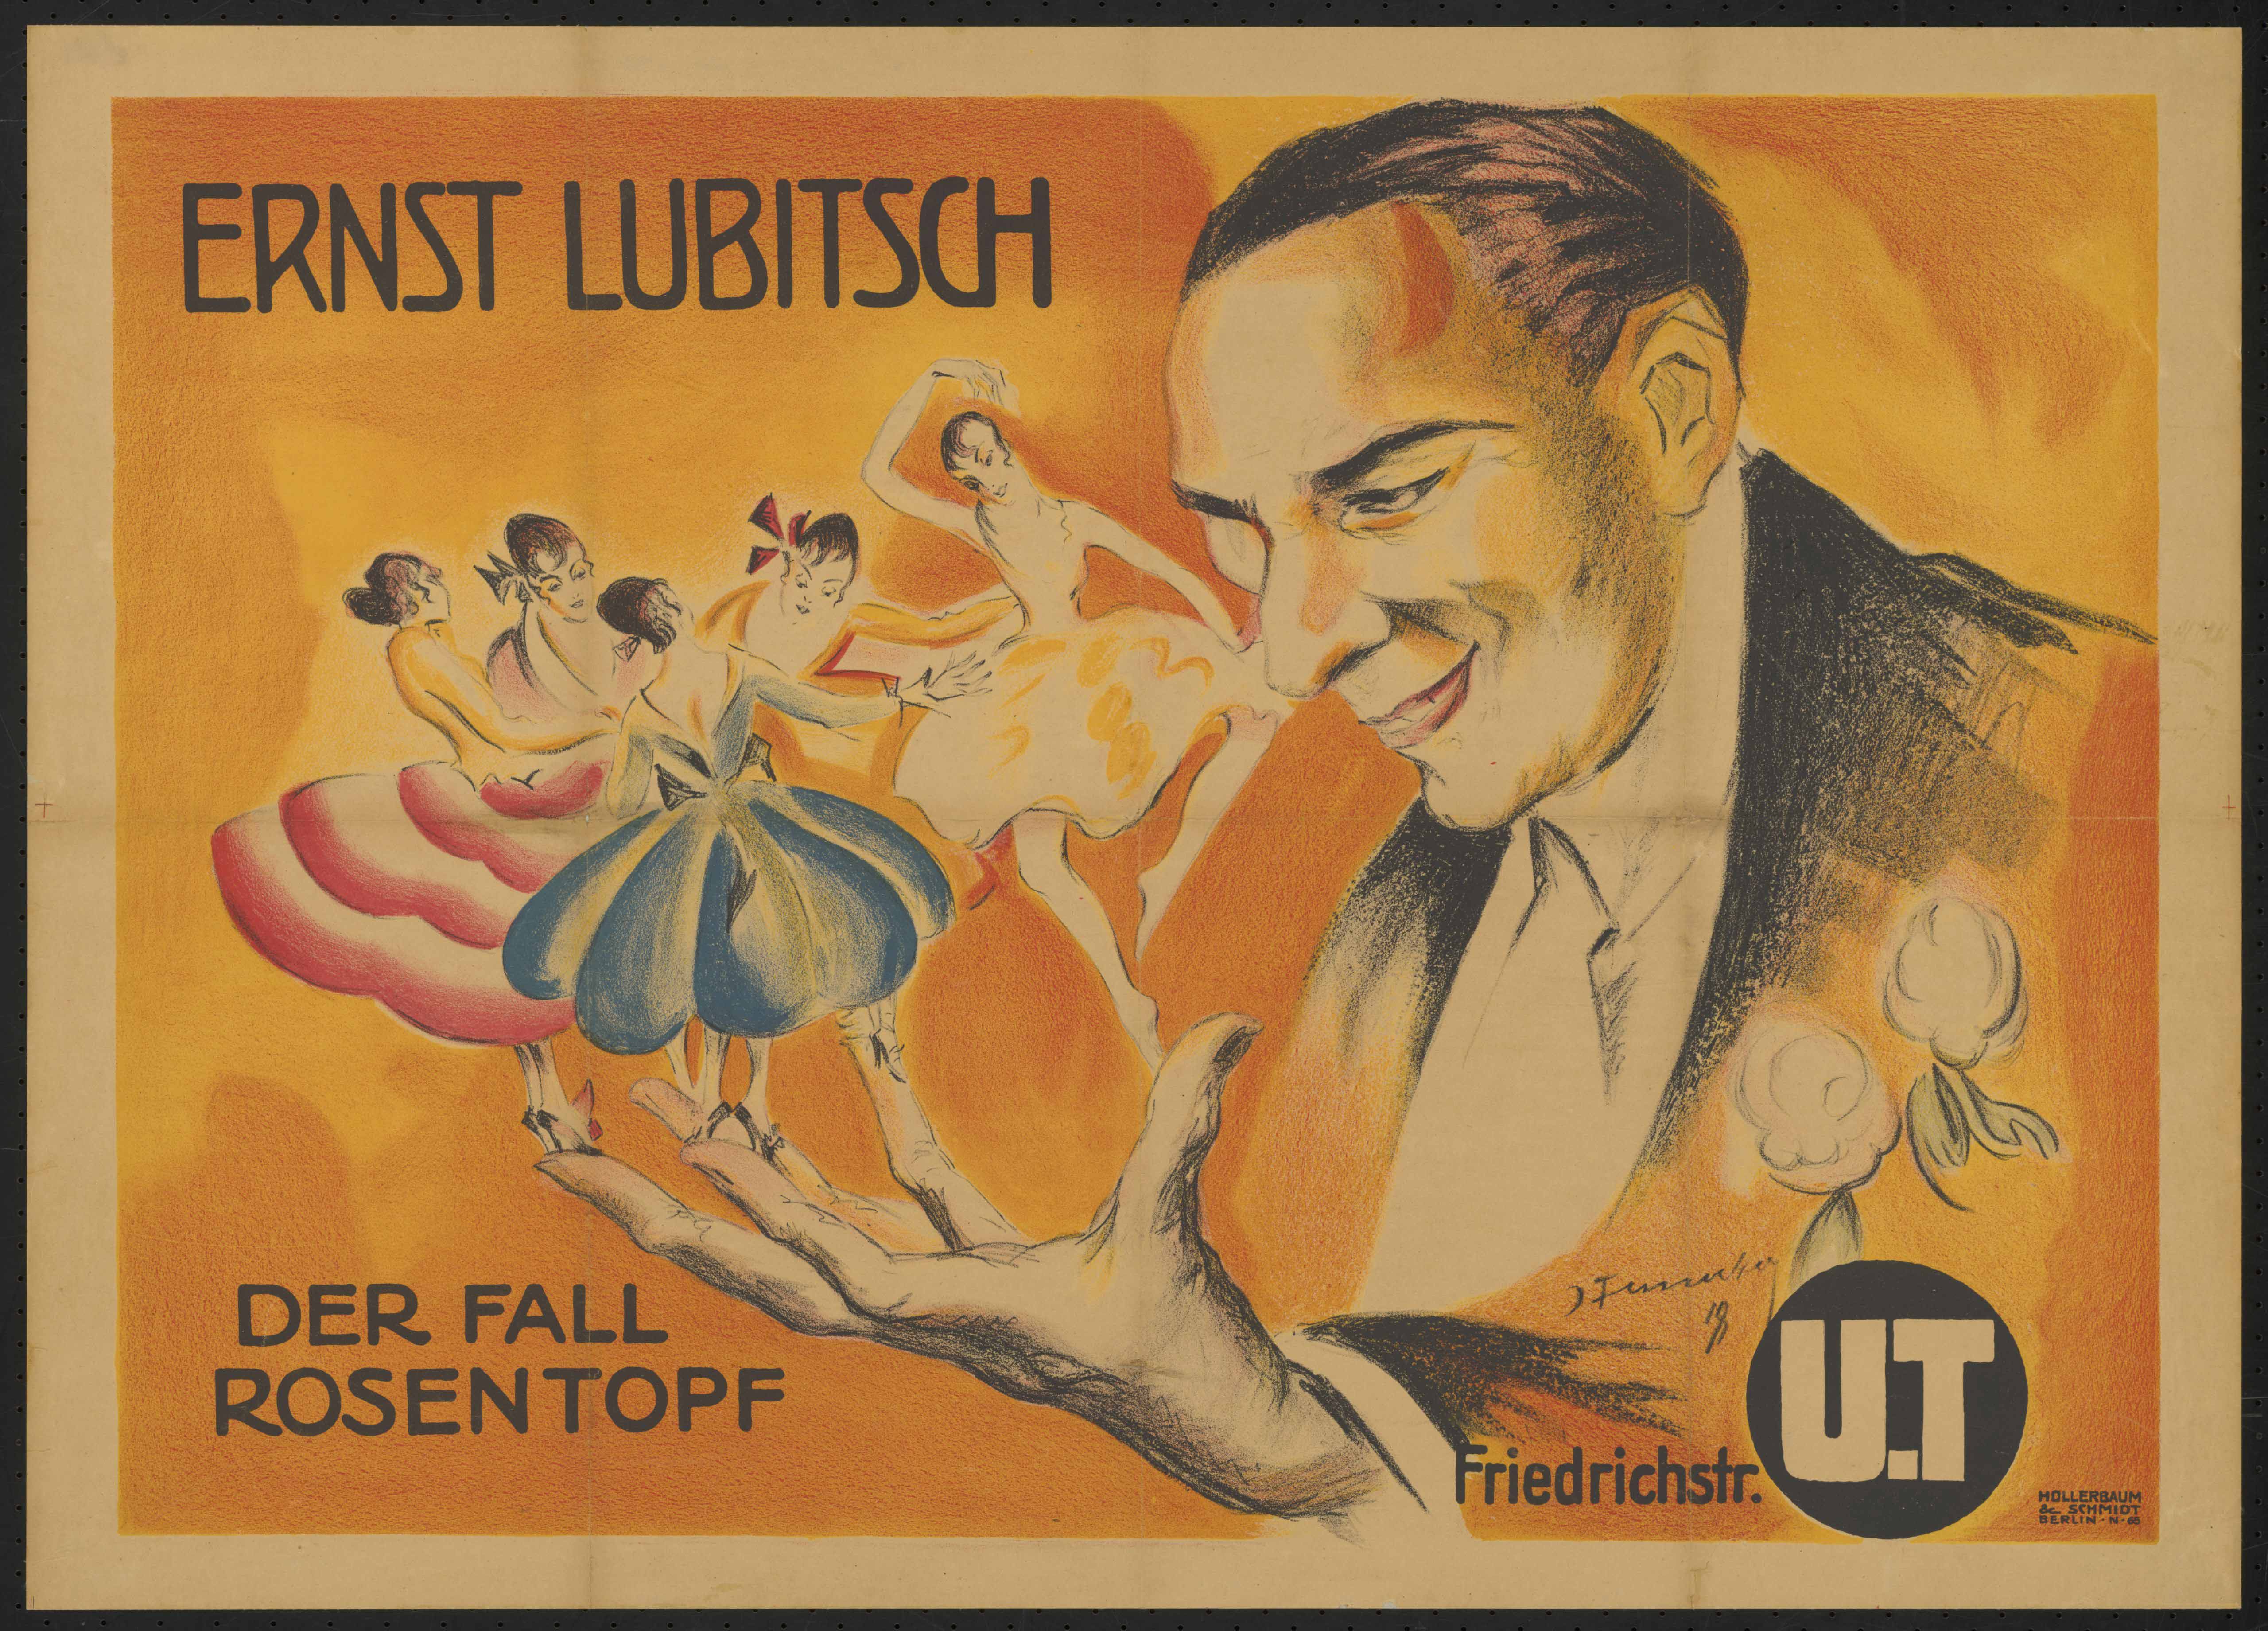 Film poster by Josef Fenneker: Der Fall Rosentopf, Germany 1919, directed by Ernst Lubitsch